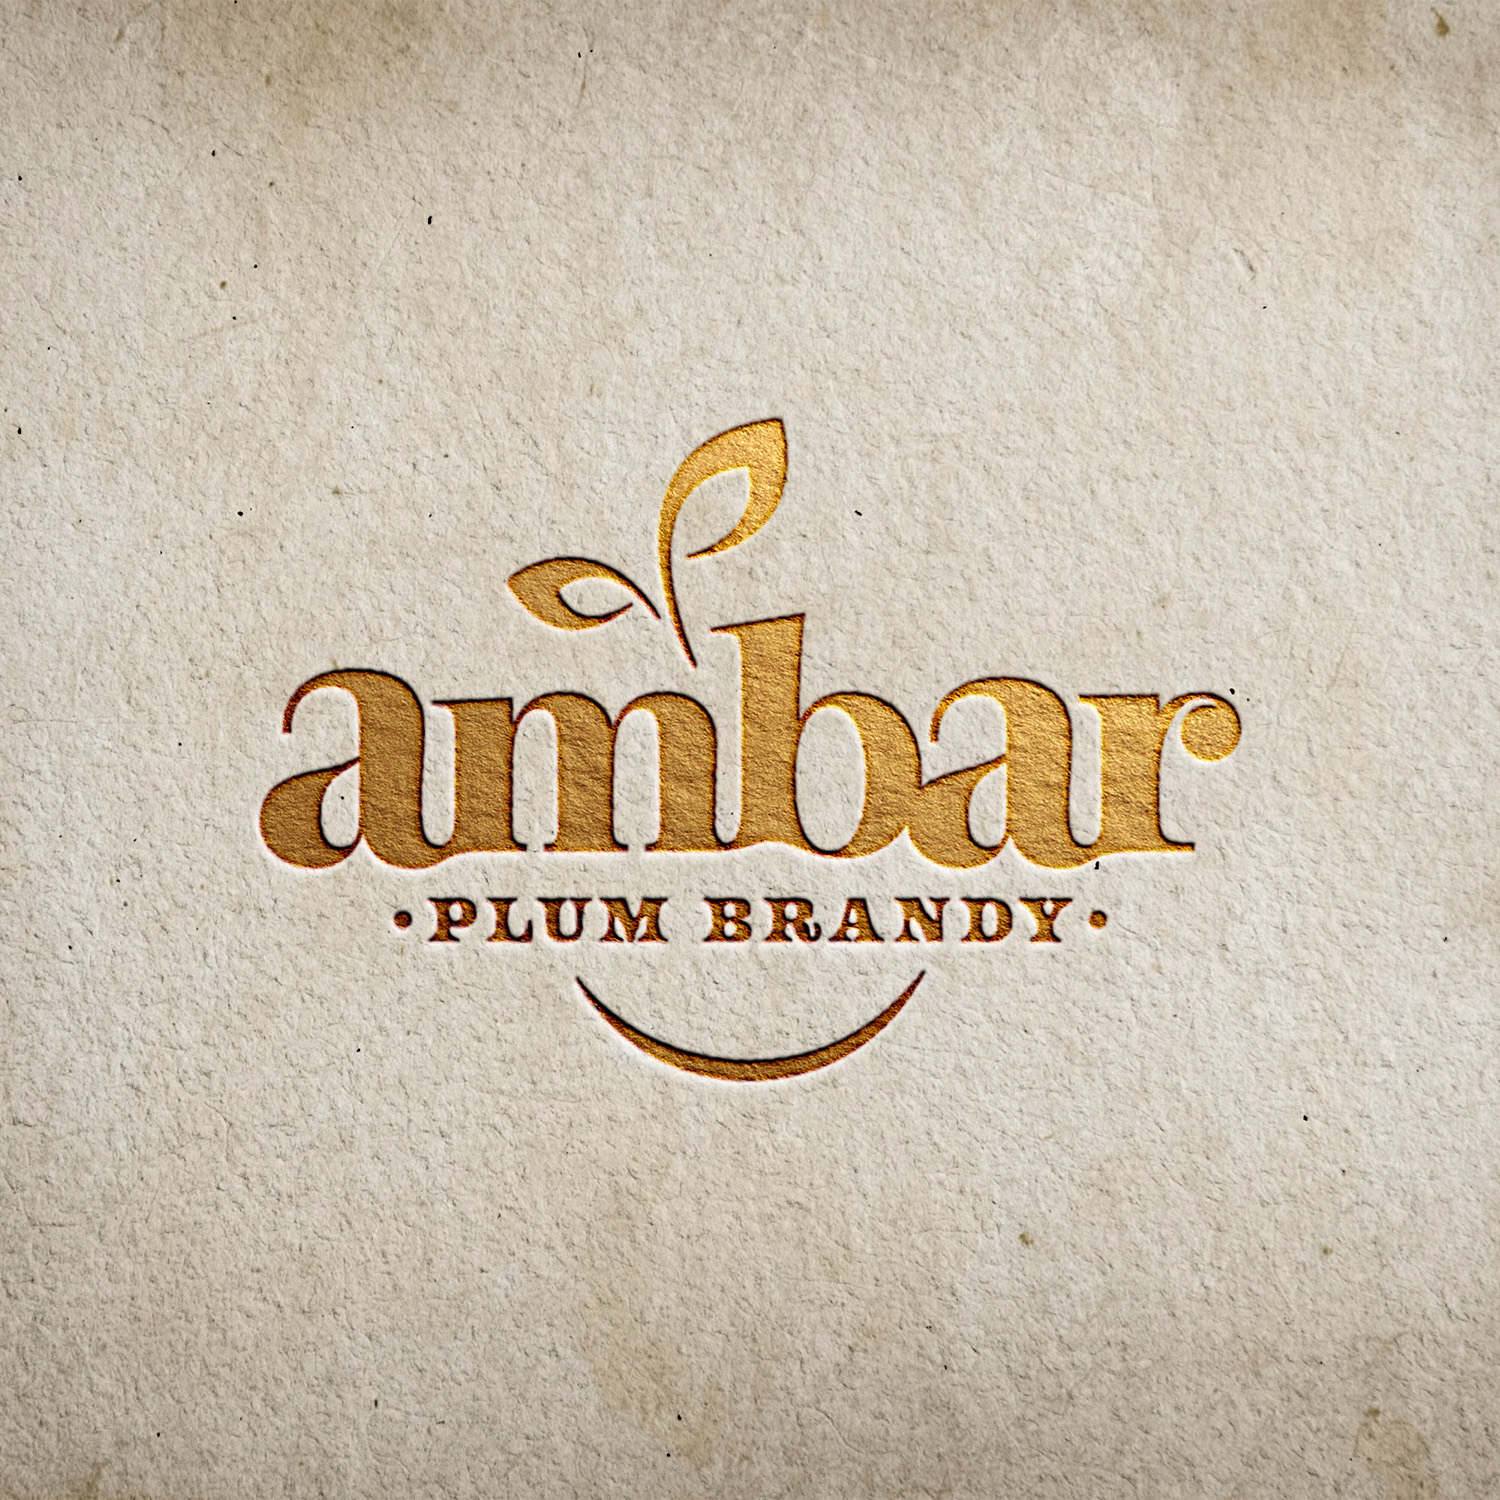 Concept design for Ambar brandy